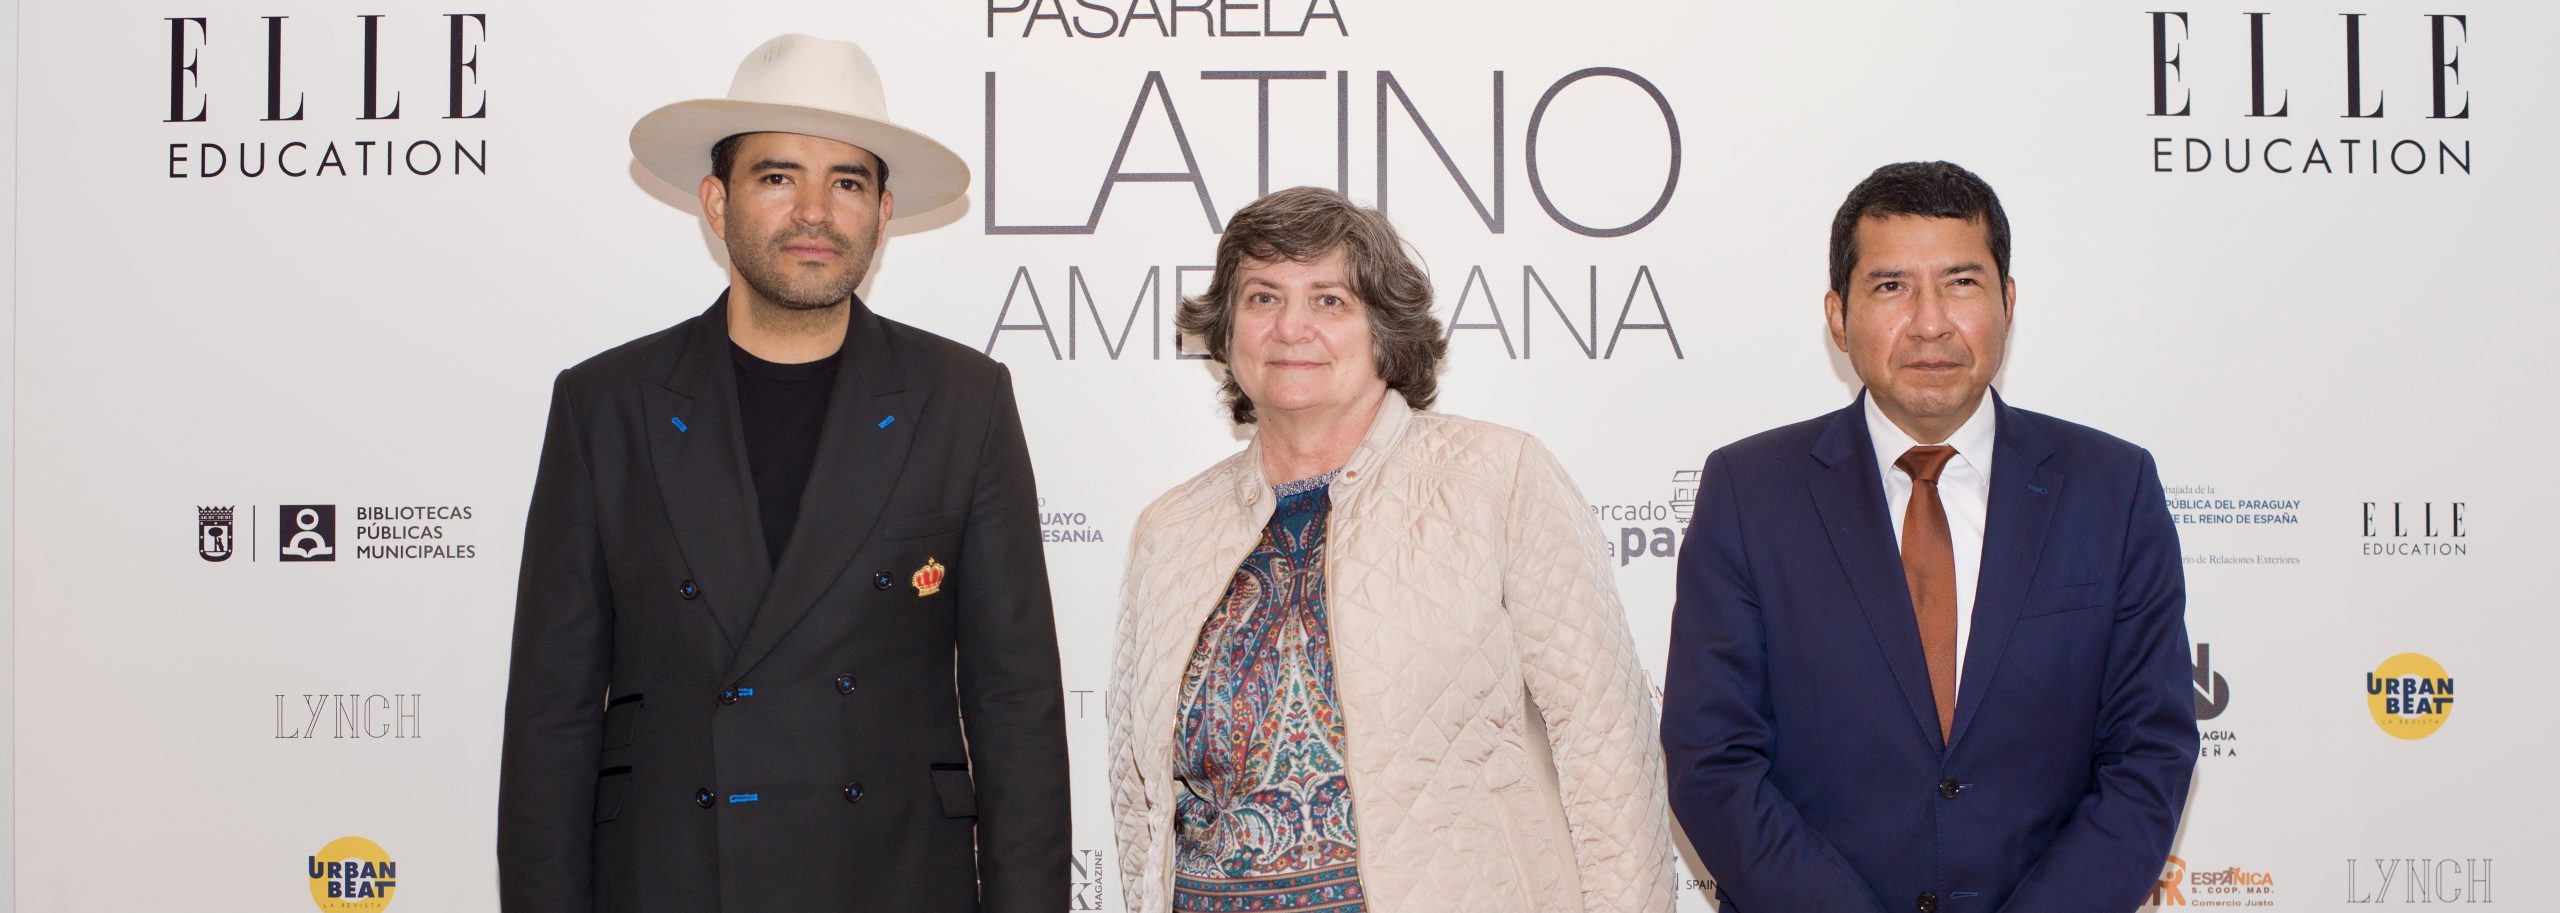 Pasarela Latinoamericana Presenta:“SUEÑOS LATINOAMERICANOS”